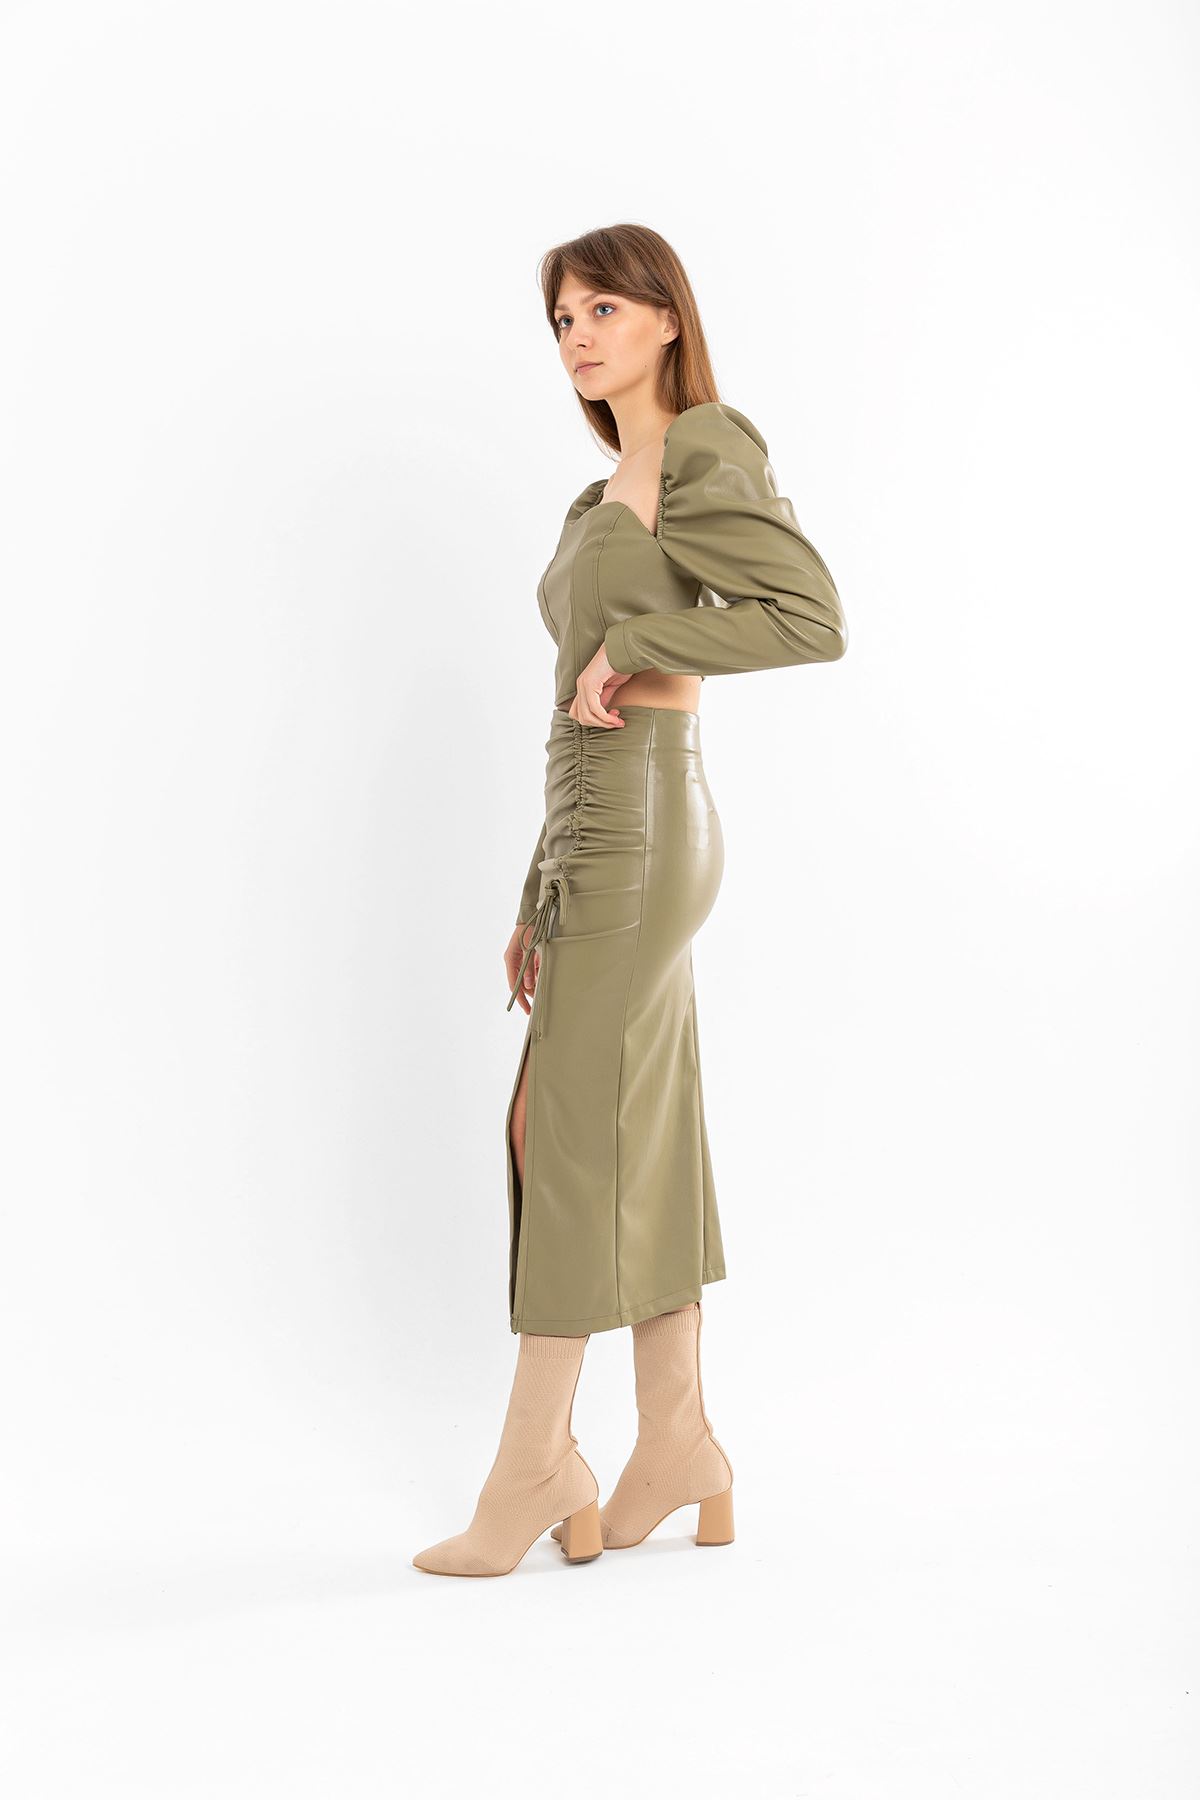 Leather Fabric Above Knee Shirred Slit Women'S Skirt - Khaki 